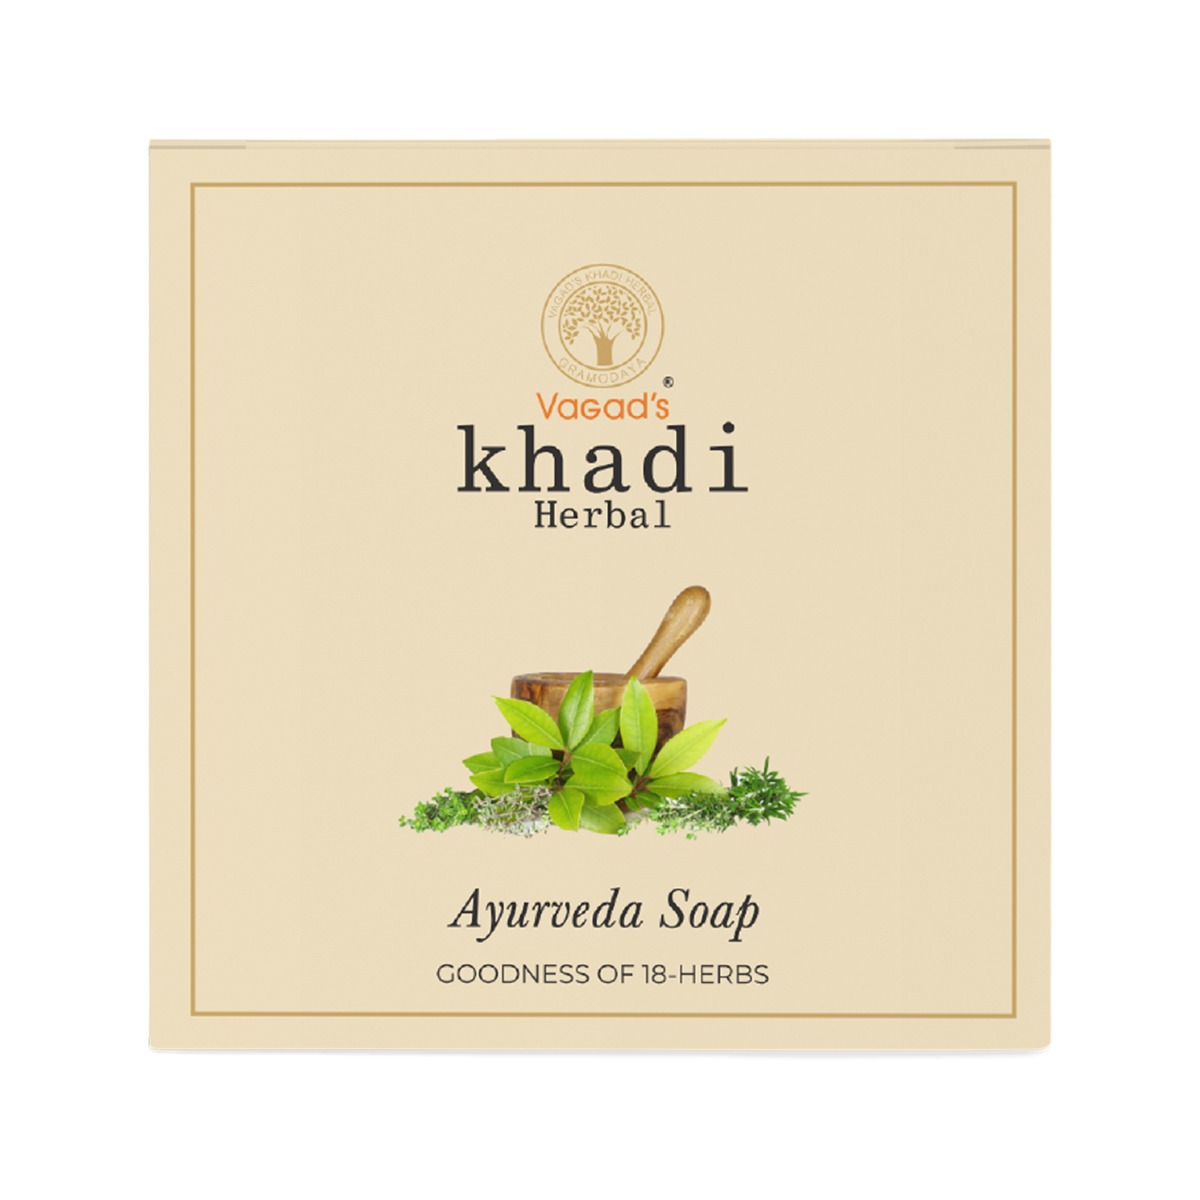 Vagad's Khadi Ayurveda Soap, 100gm